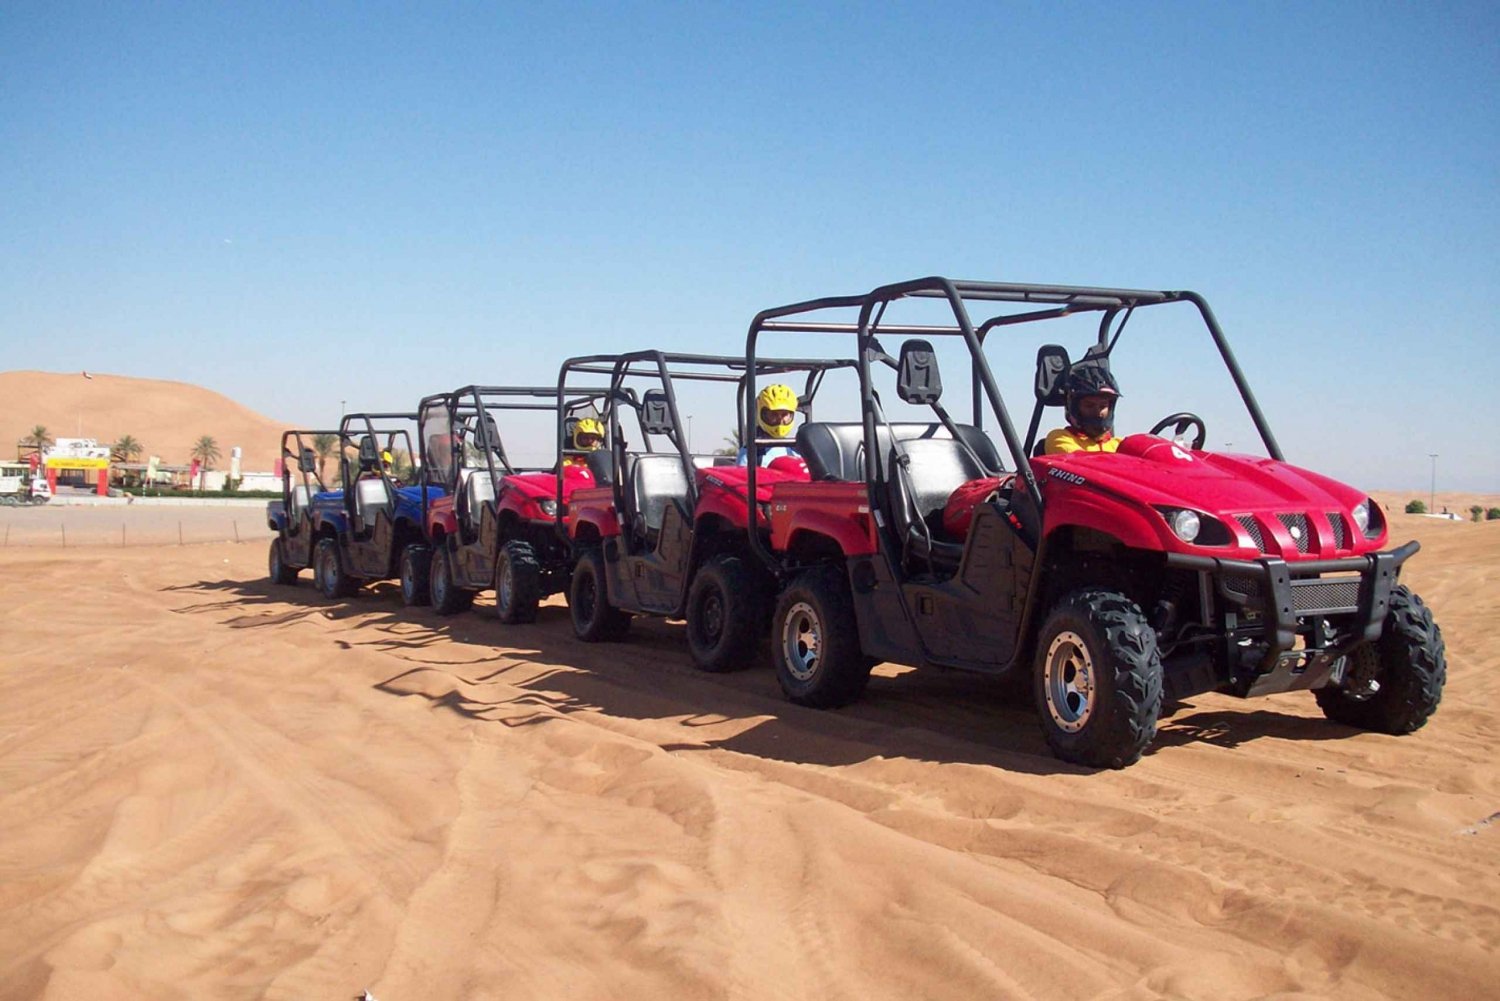 Dune Buggy Desert Safari from Sharm el Sheikh